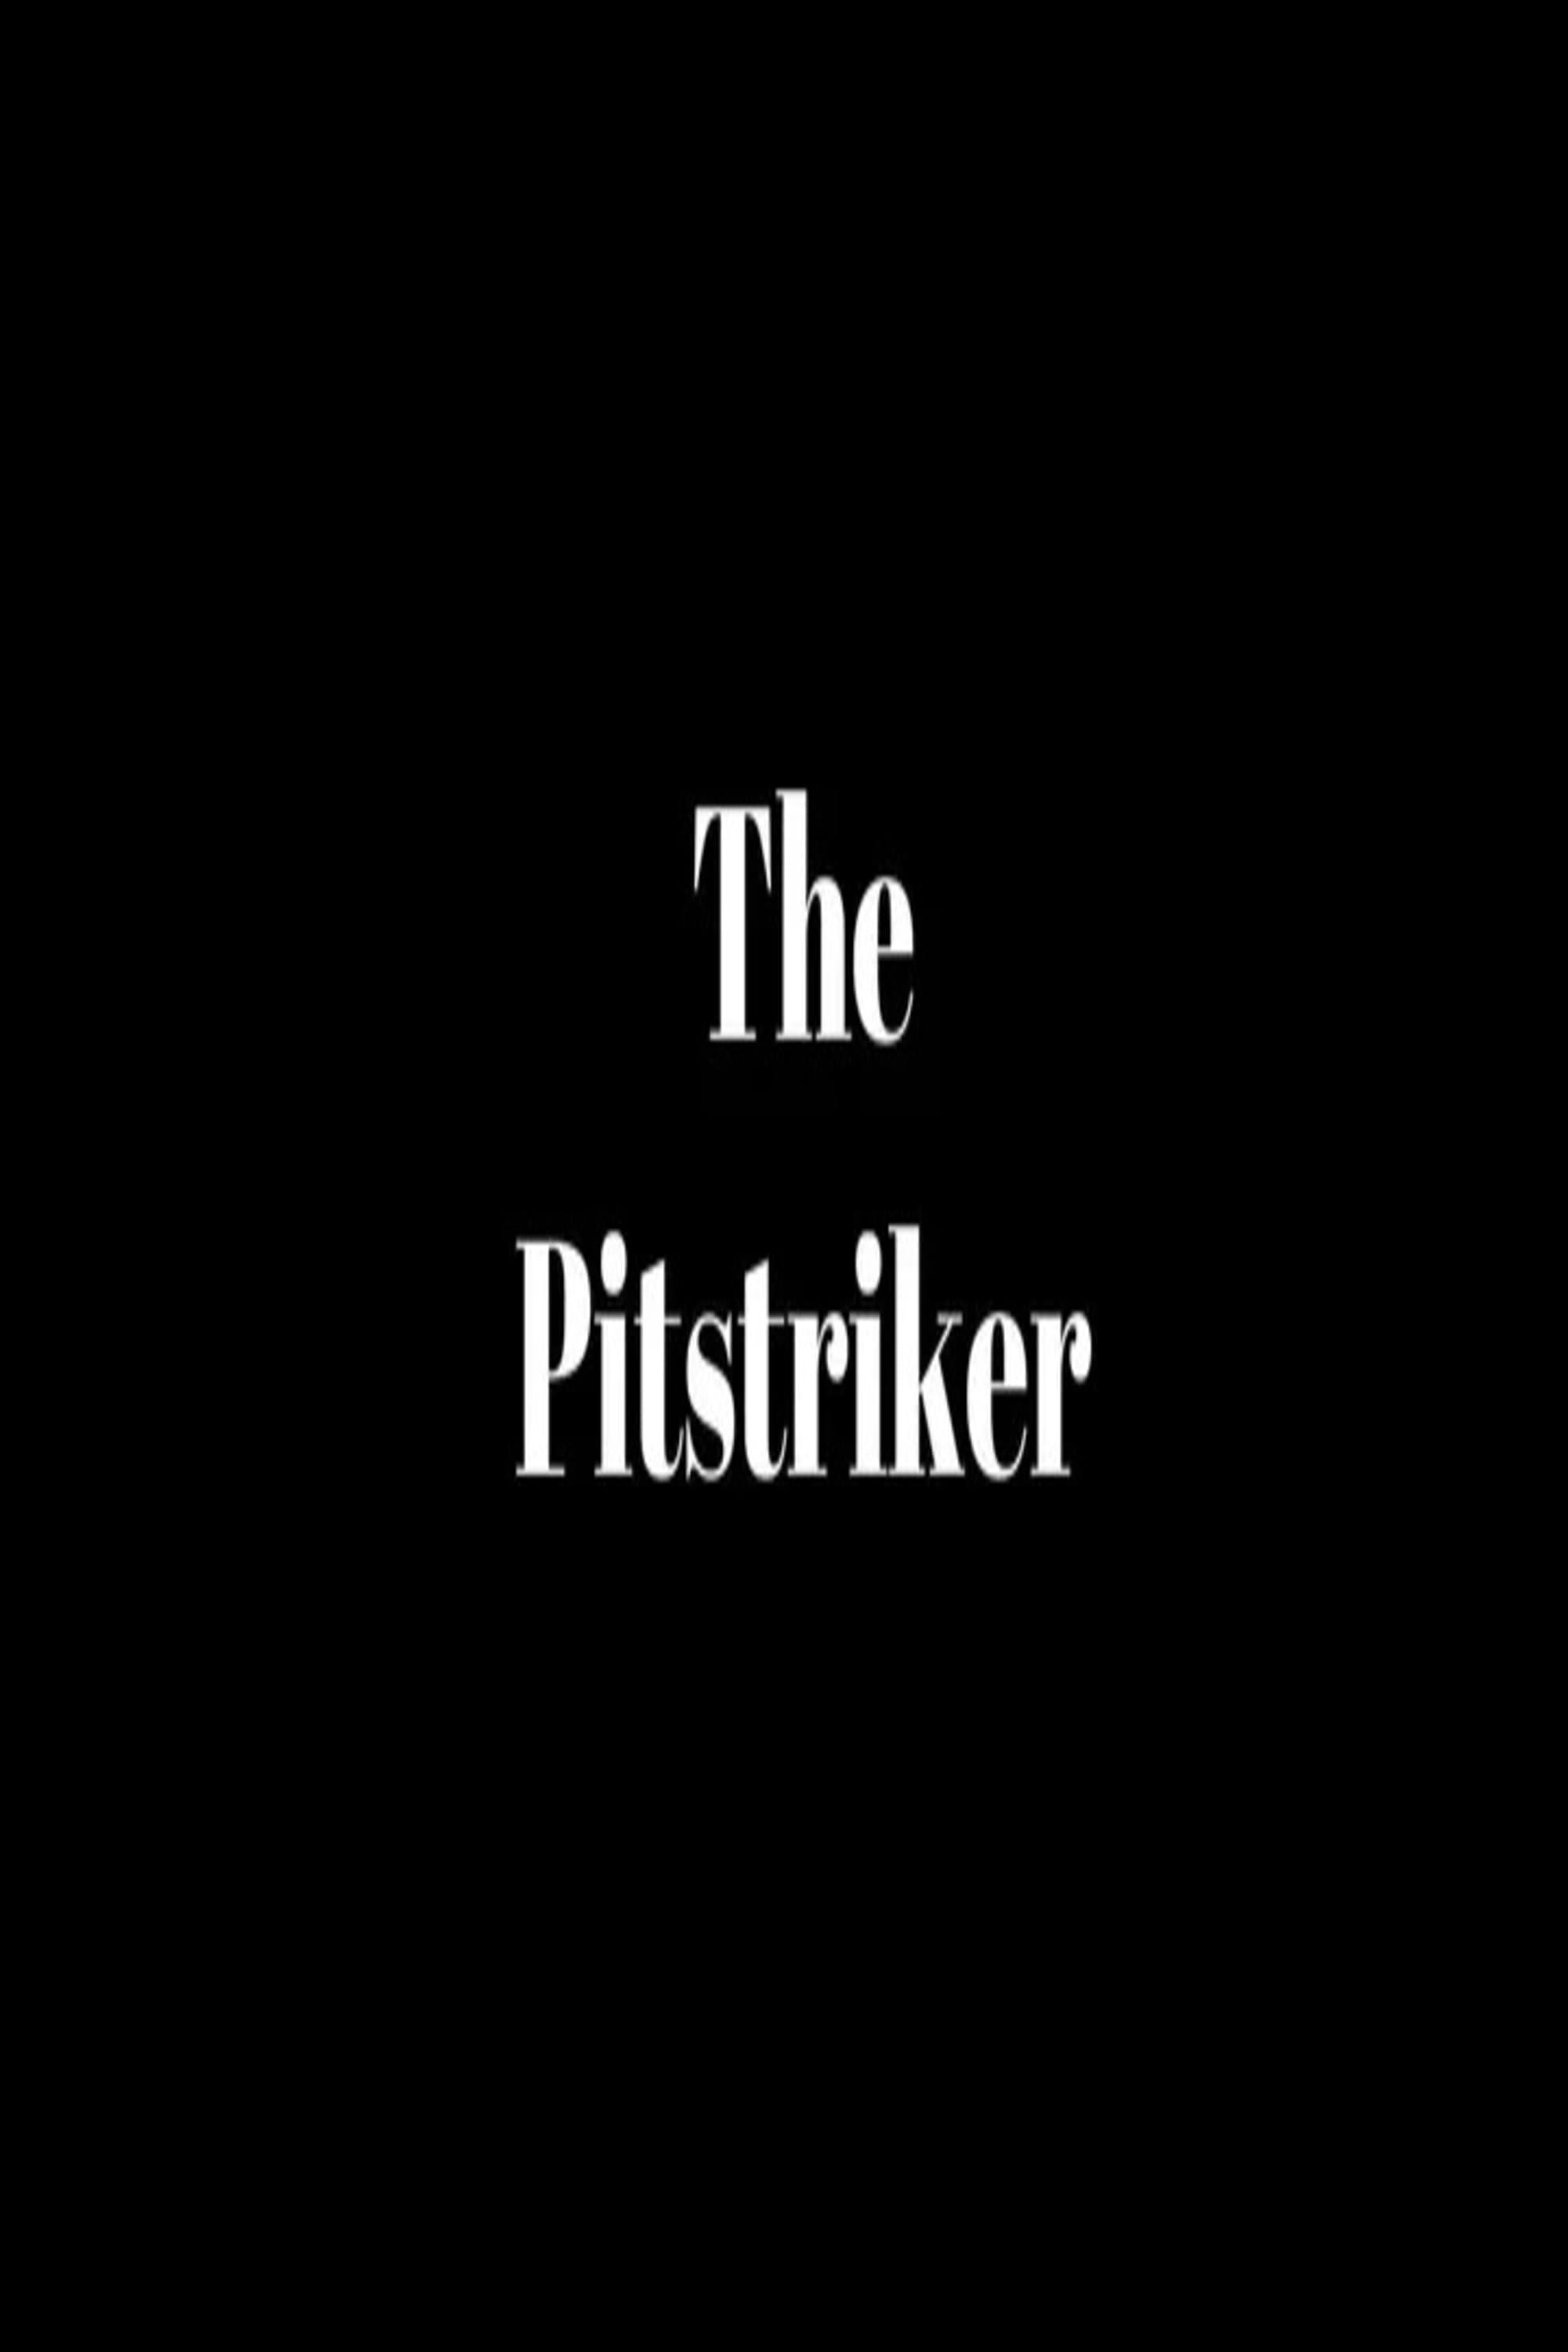 The Pitstriker